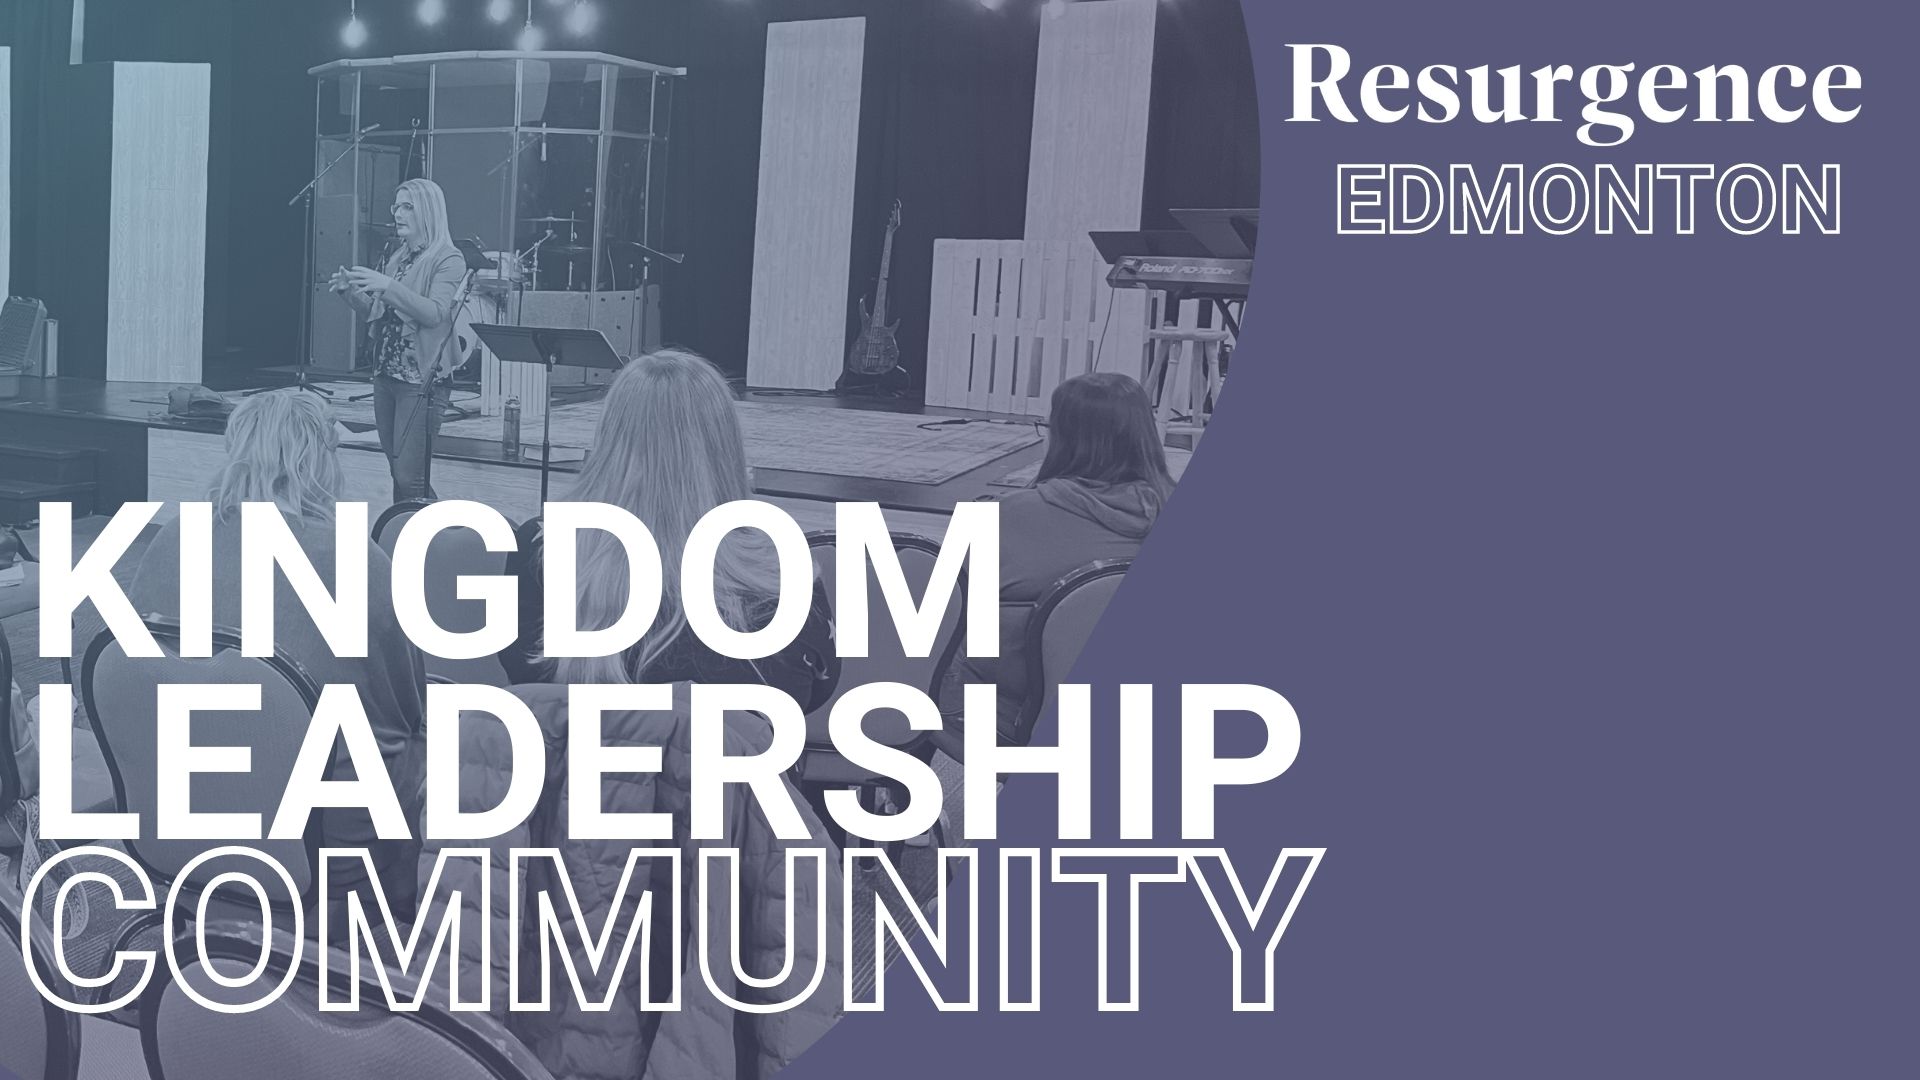 Sept. 26 – May 30: Kingdom Leadership Community